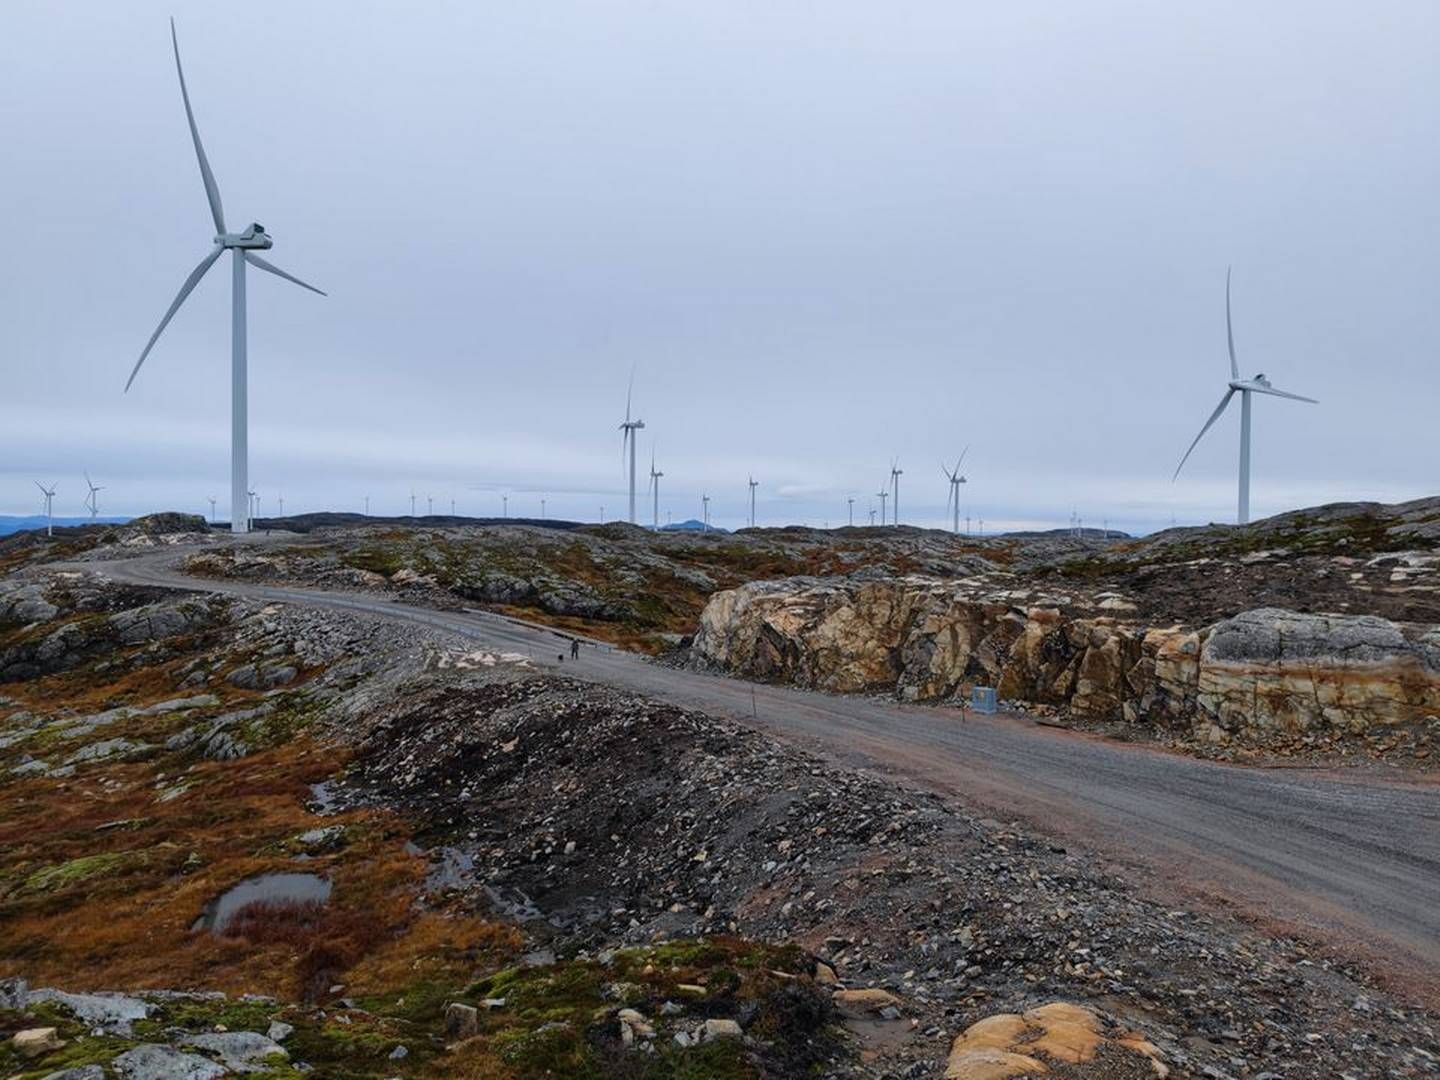 Motvind Norge mener vindkrafteierne på Fosen tjener penger på menneskerettighetsbrudd. | Foto: Eivind Salen, Motvind Norge